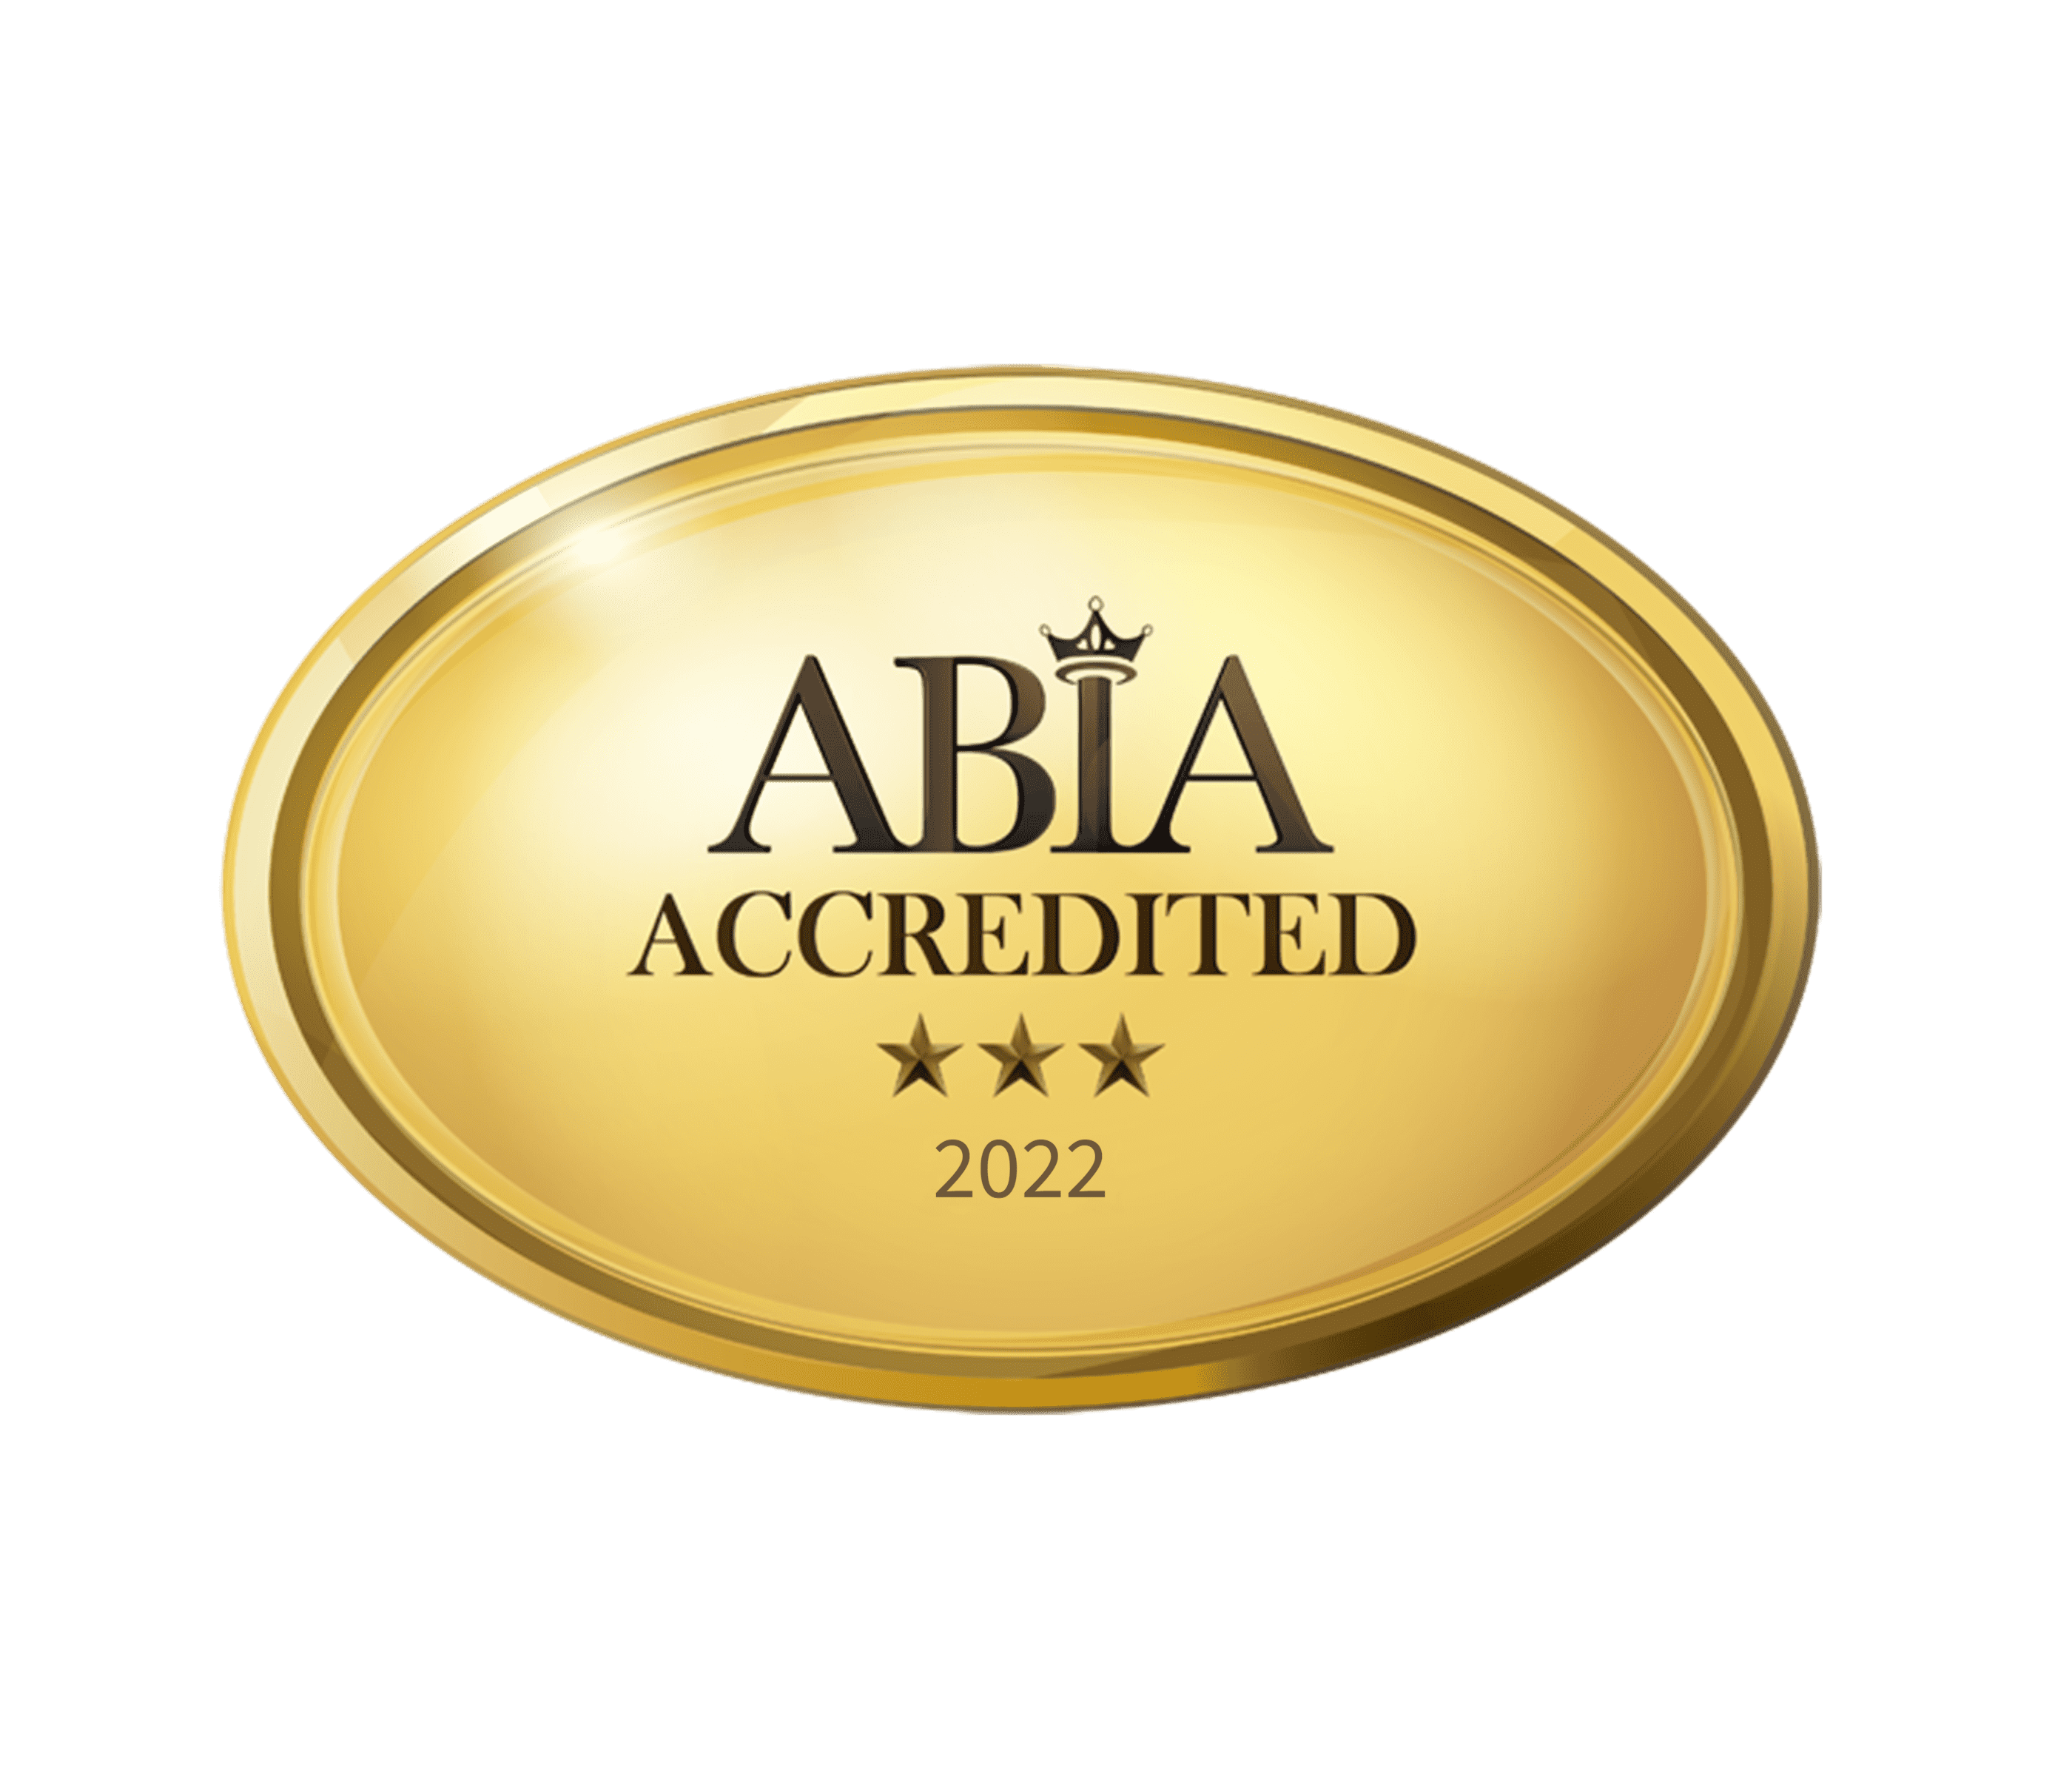 ABIA 2022 Gold Accreditation